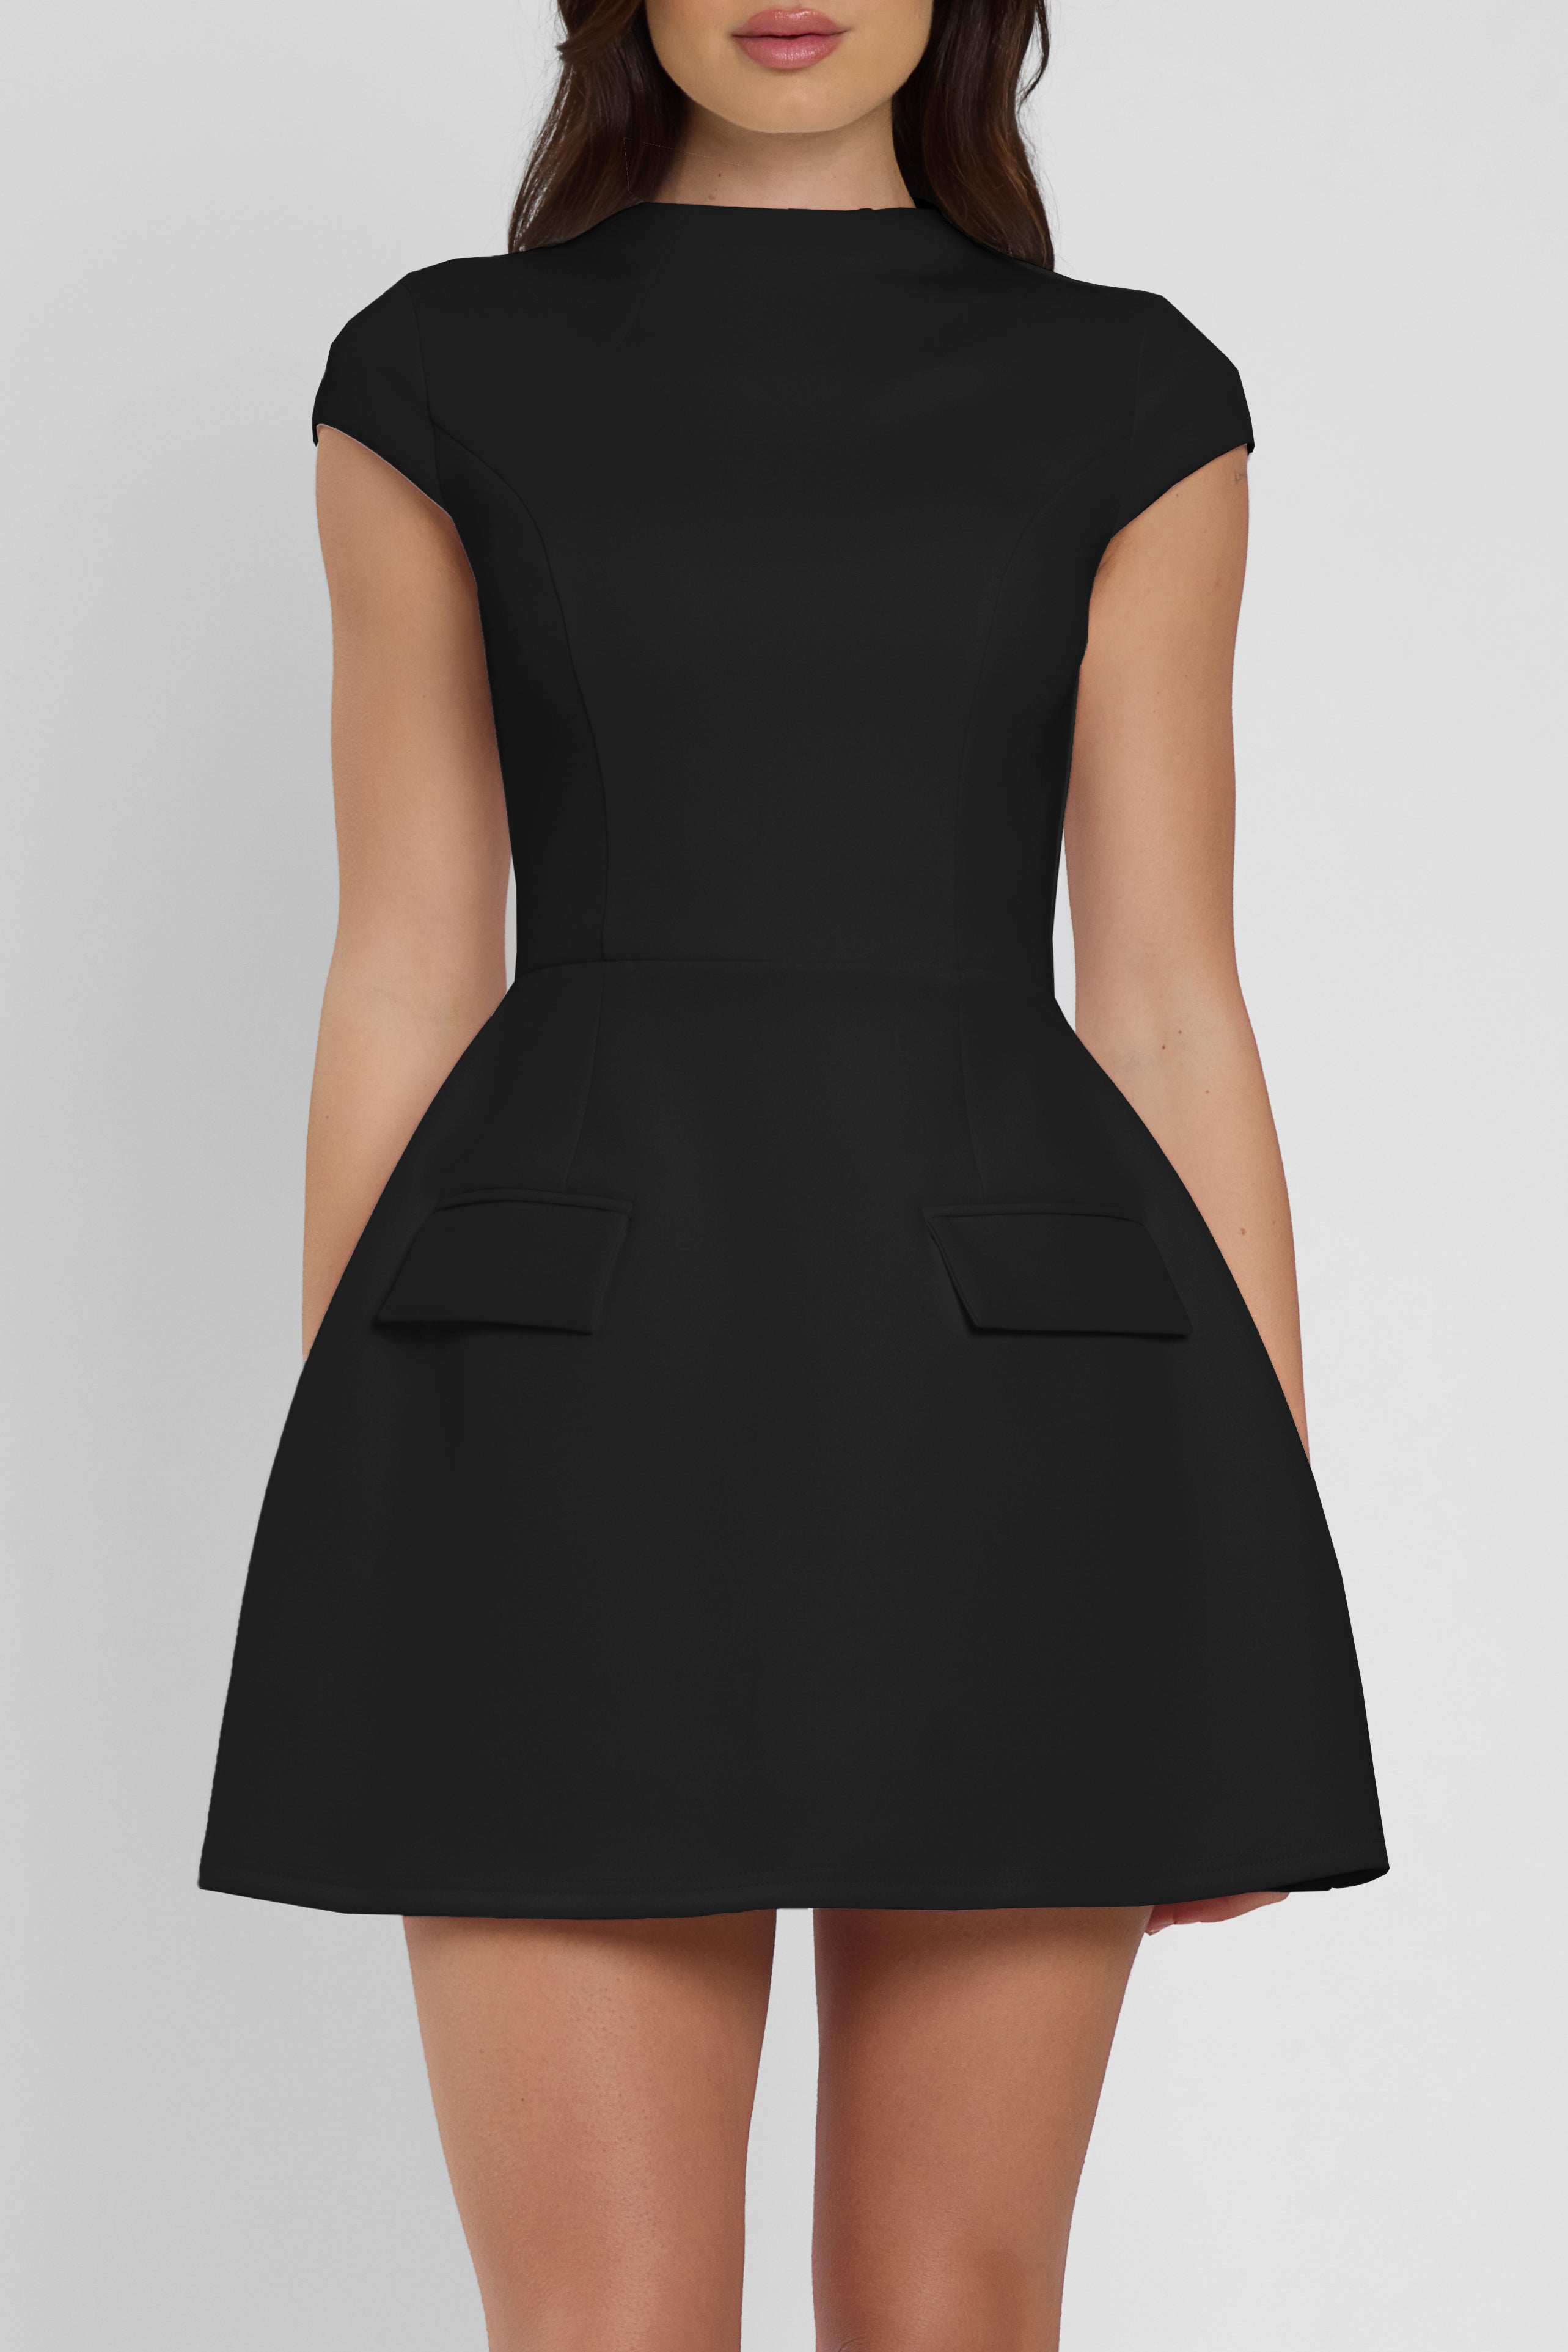 Cote Cap Sleeve Pocket Mini Dress - Black